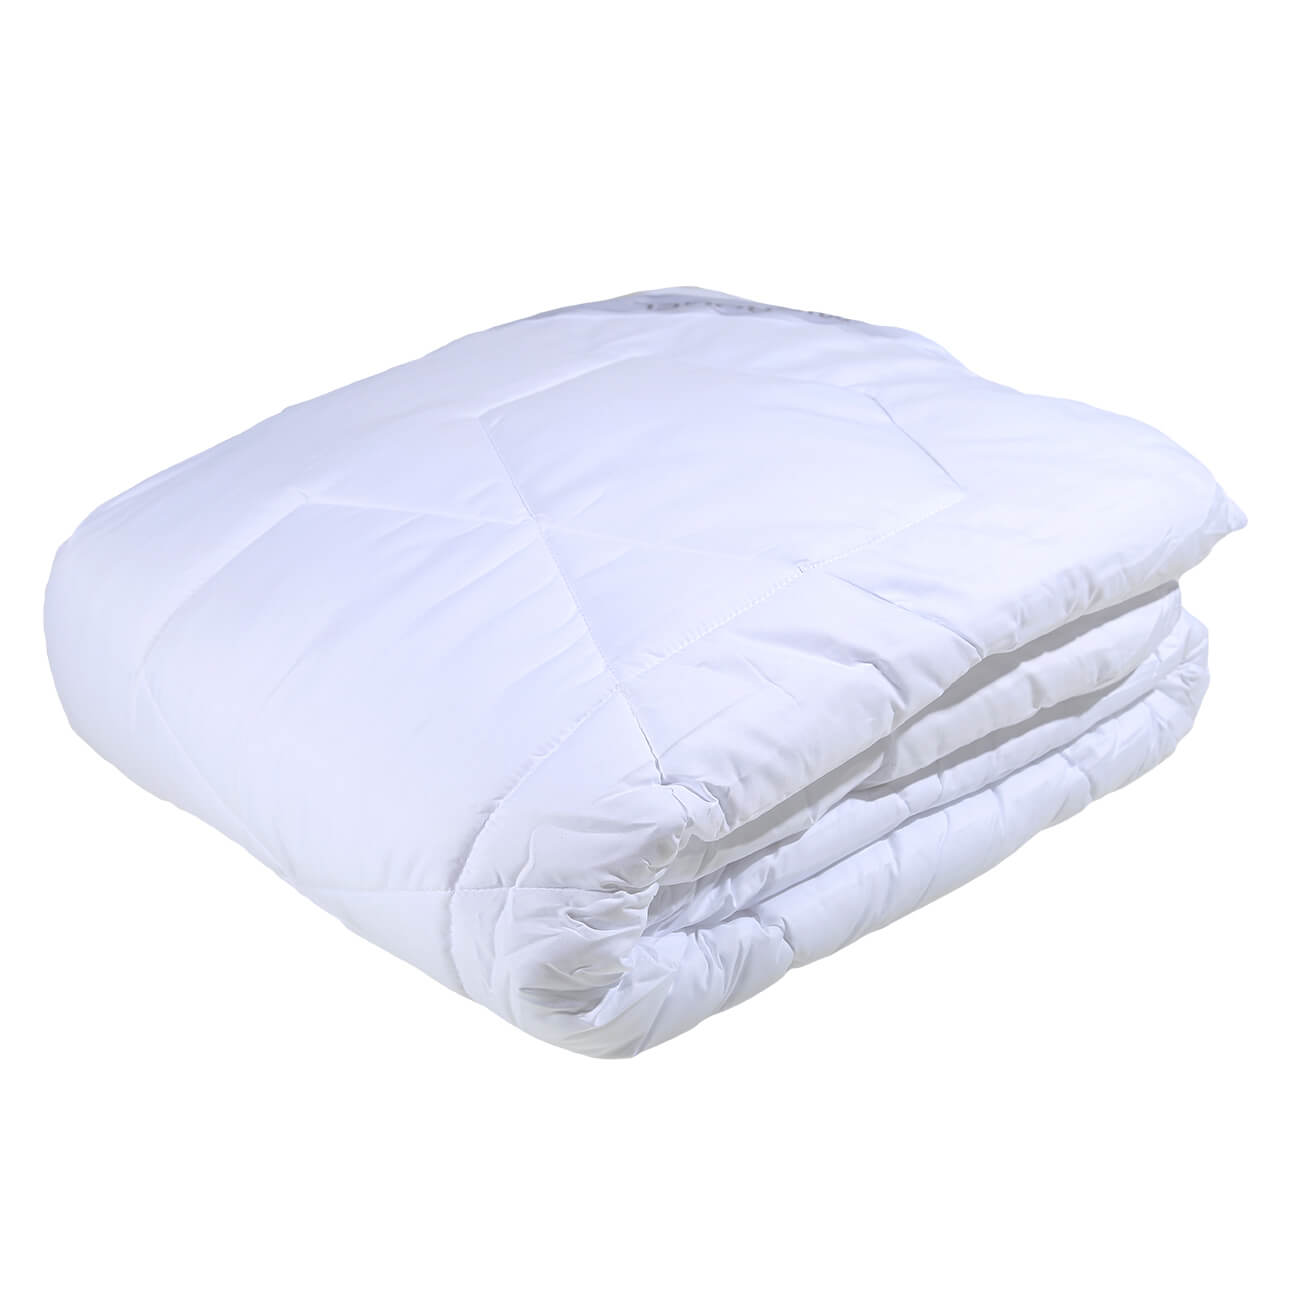 Одеяло, 200x220 cм, микрофибра/микрогель, Microgel одеяло 200х220 см микрофибра дакрон молочное cloud fiber